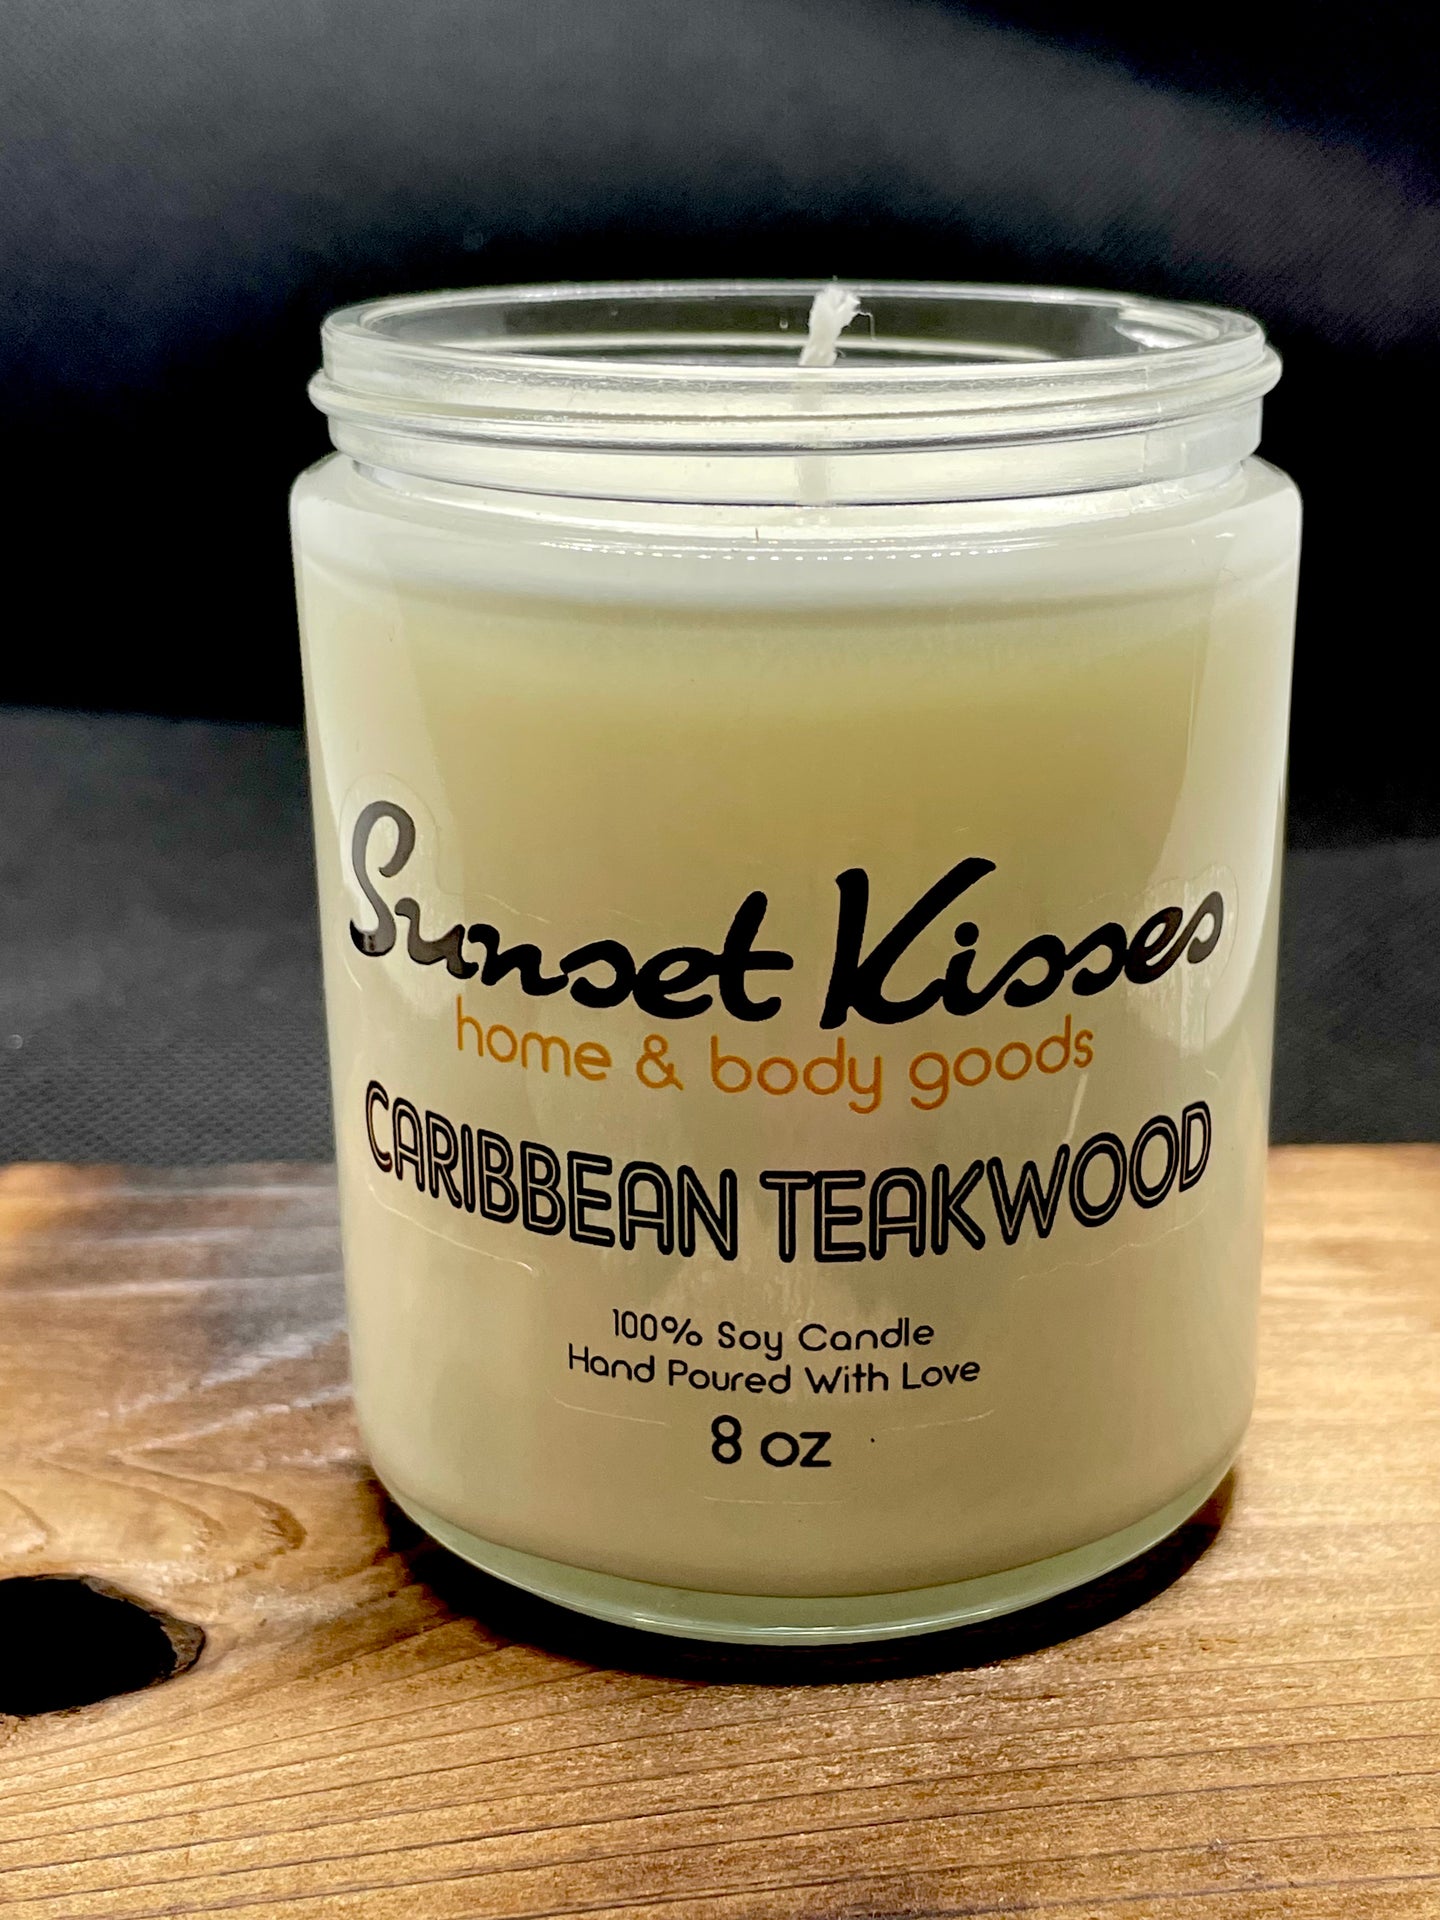 Caribbean Teakwood Single Wick Candle